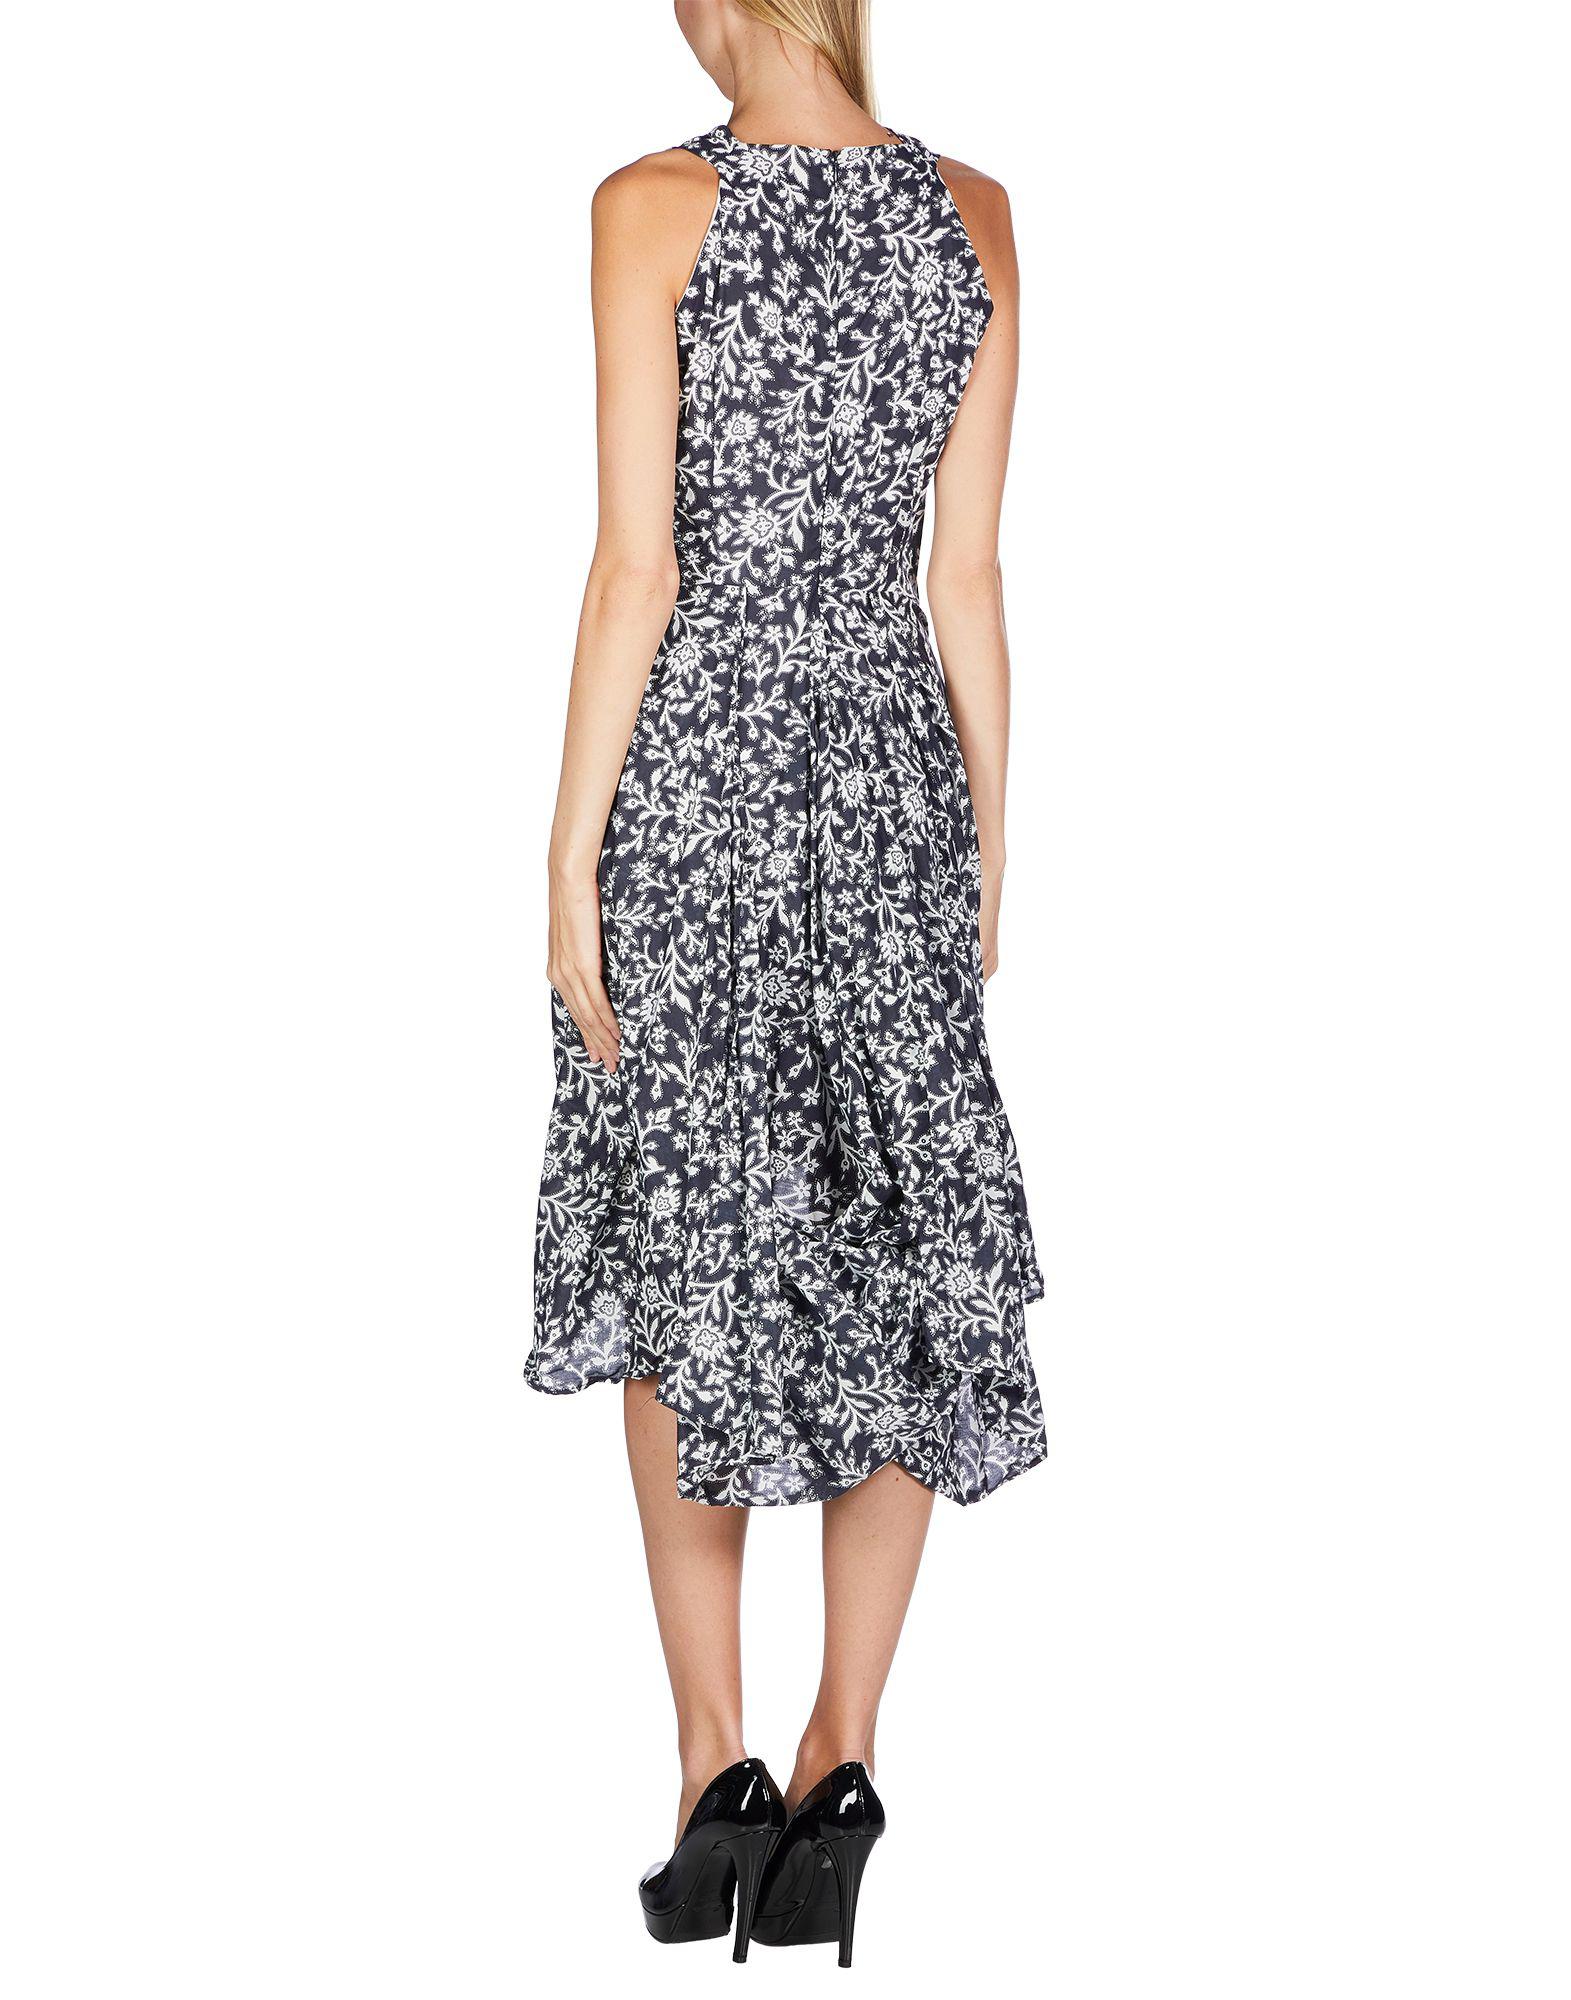 Vivienne Westwood Anglomania Cotton 3/4 Length Dress - Lyst